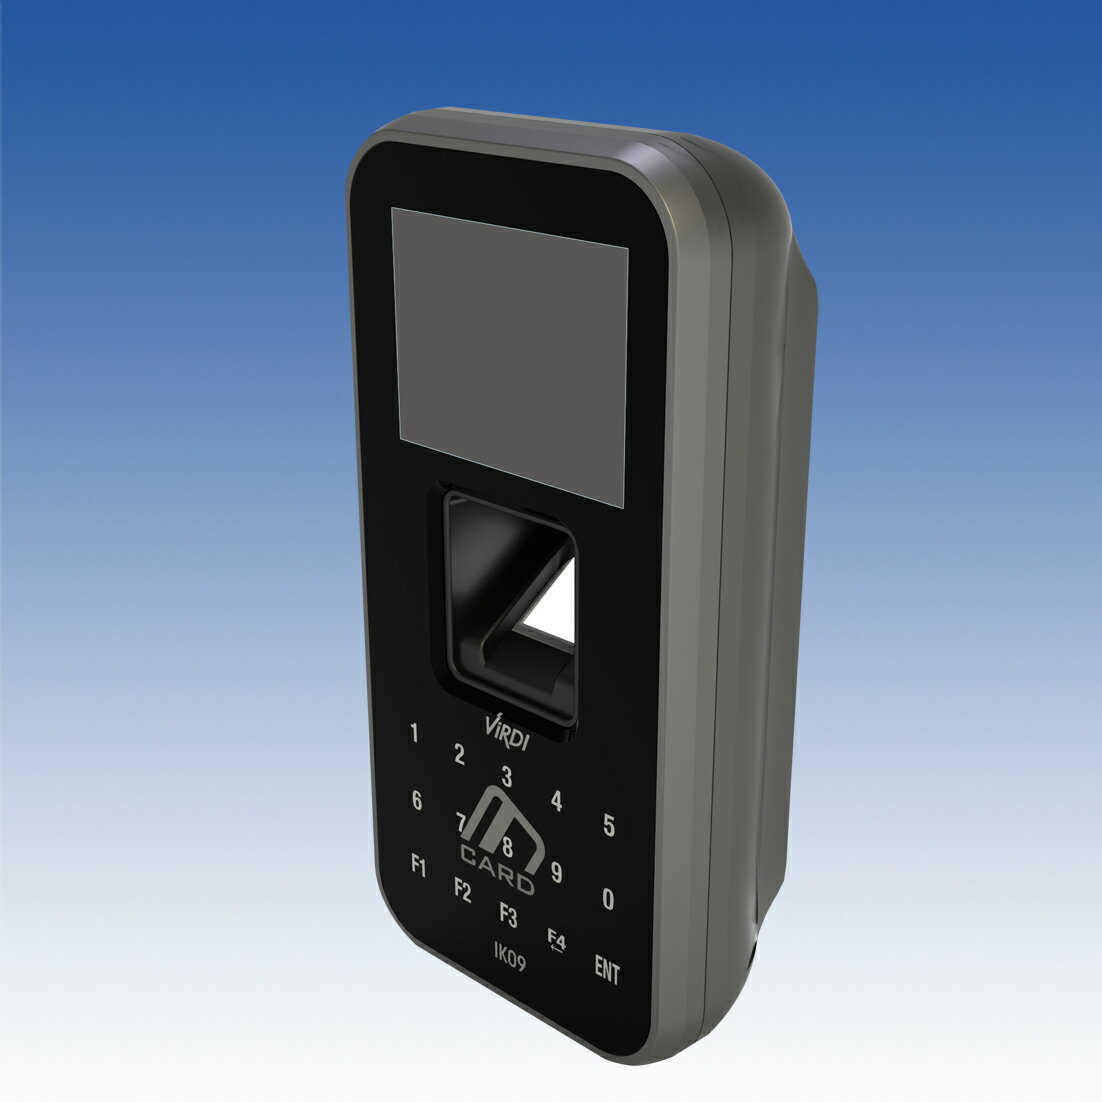 【AC5000IK】 フェリカ対応型指紋認証システム TAKEX 竹中エンジニアリング